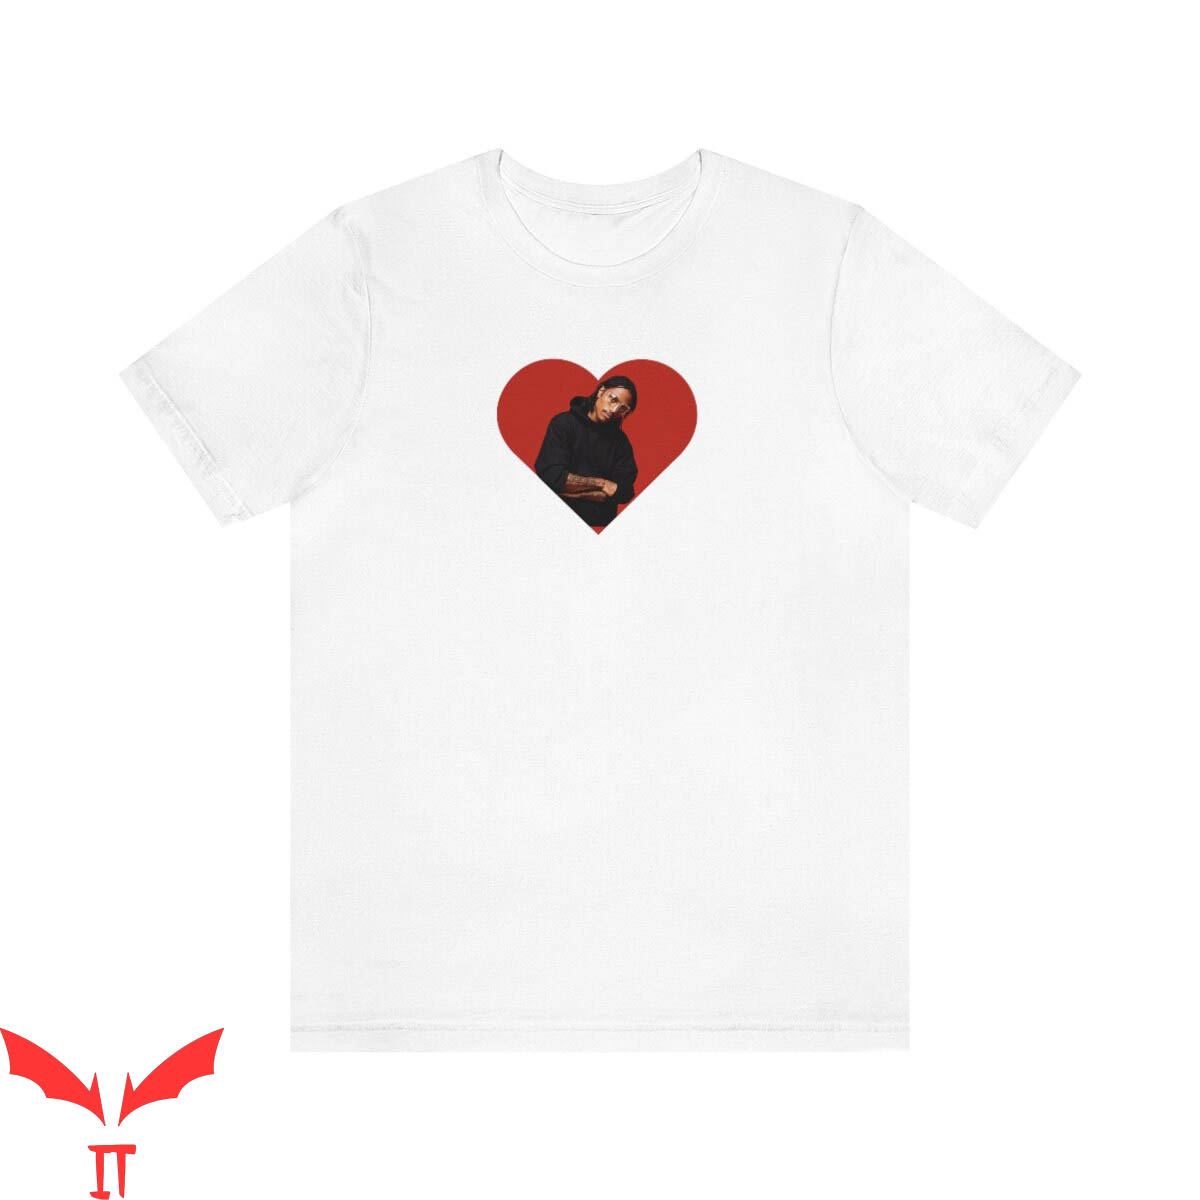 Steve Lacy T-Shirt Heart Vintage Tour Cool Graphic Tee